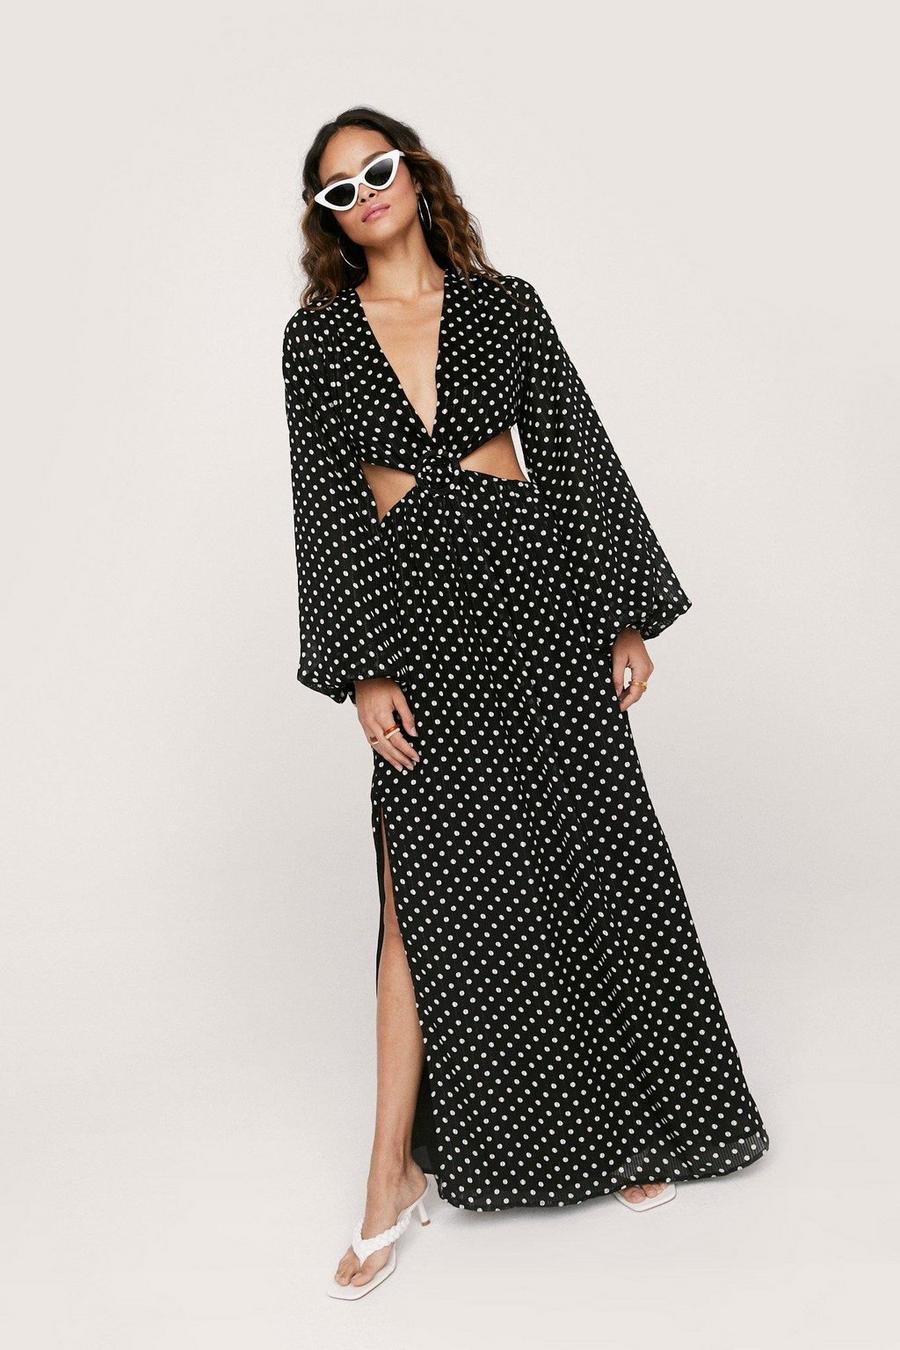 Black Polka Dot Long Sleeve Cut Out Maxi Dress image number 1